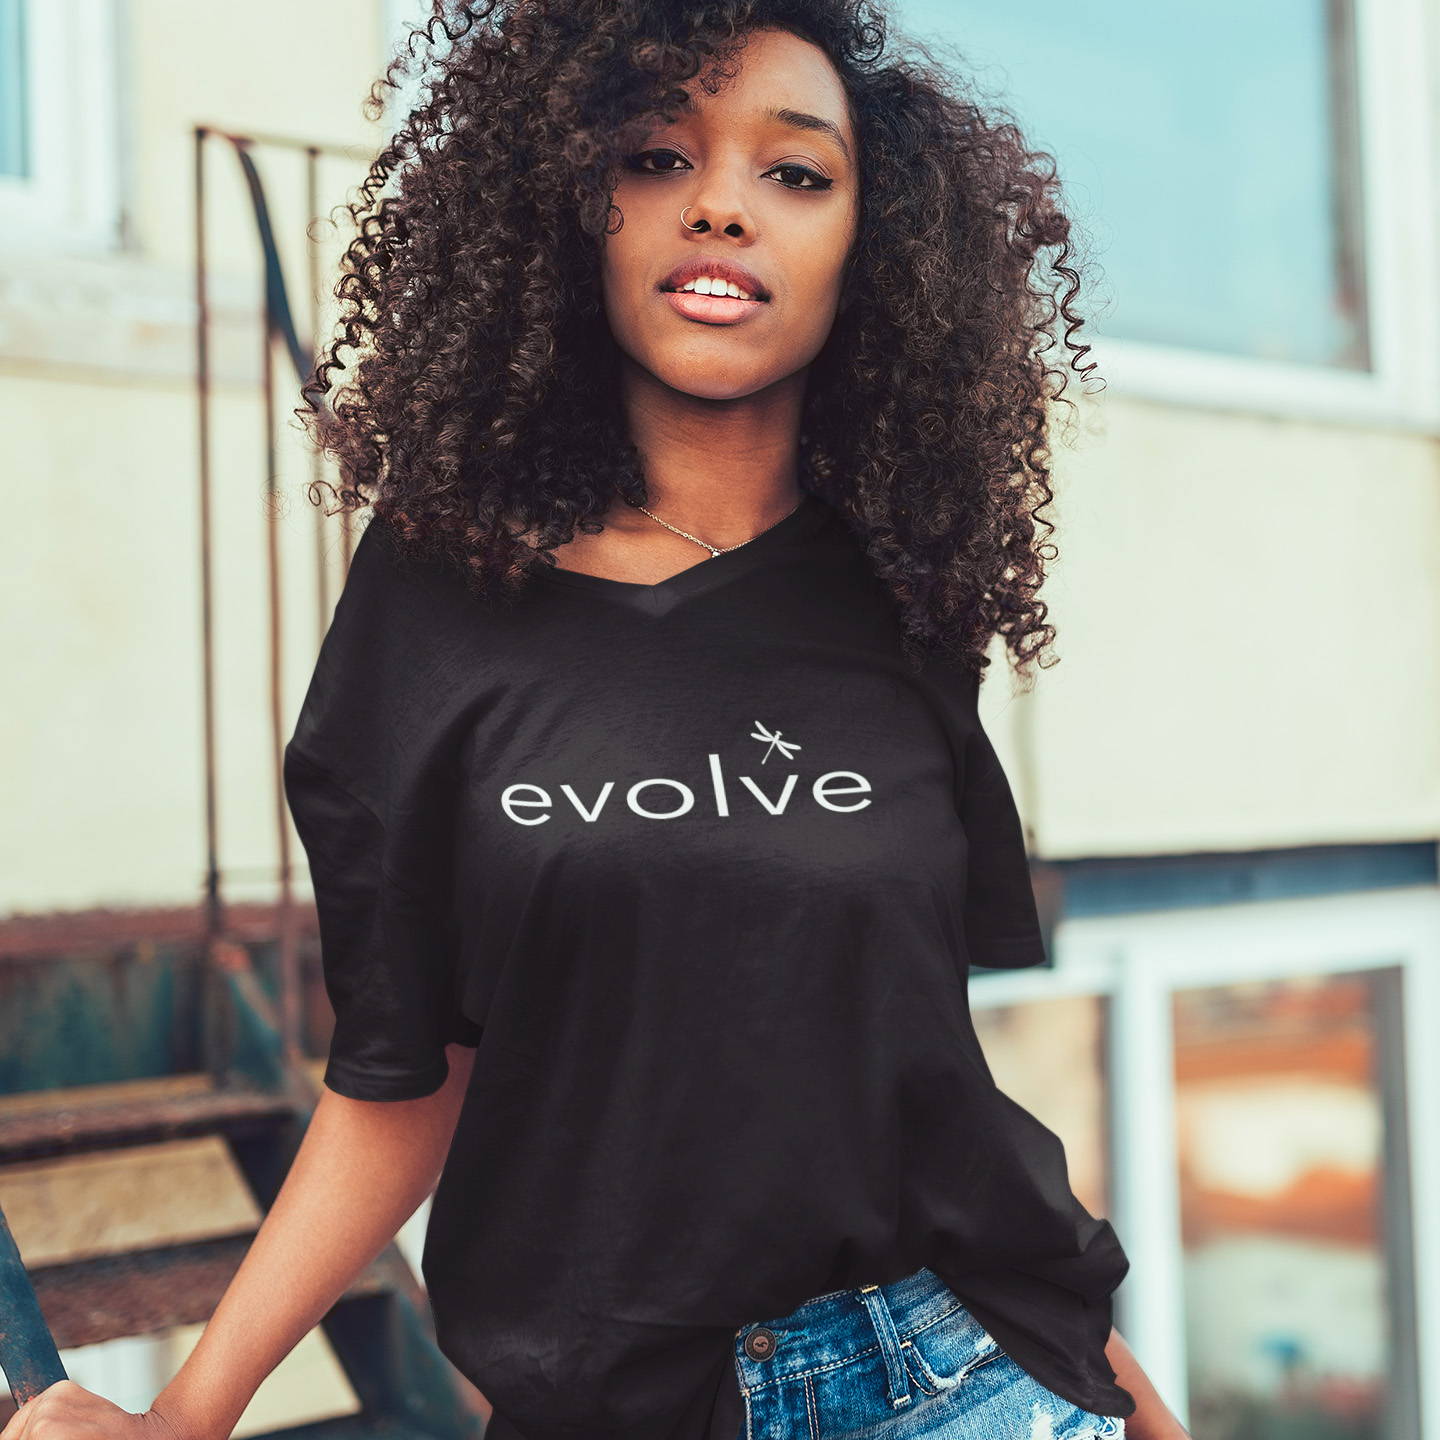 Black woman wearing a vneck shirt that says evolve